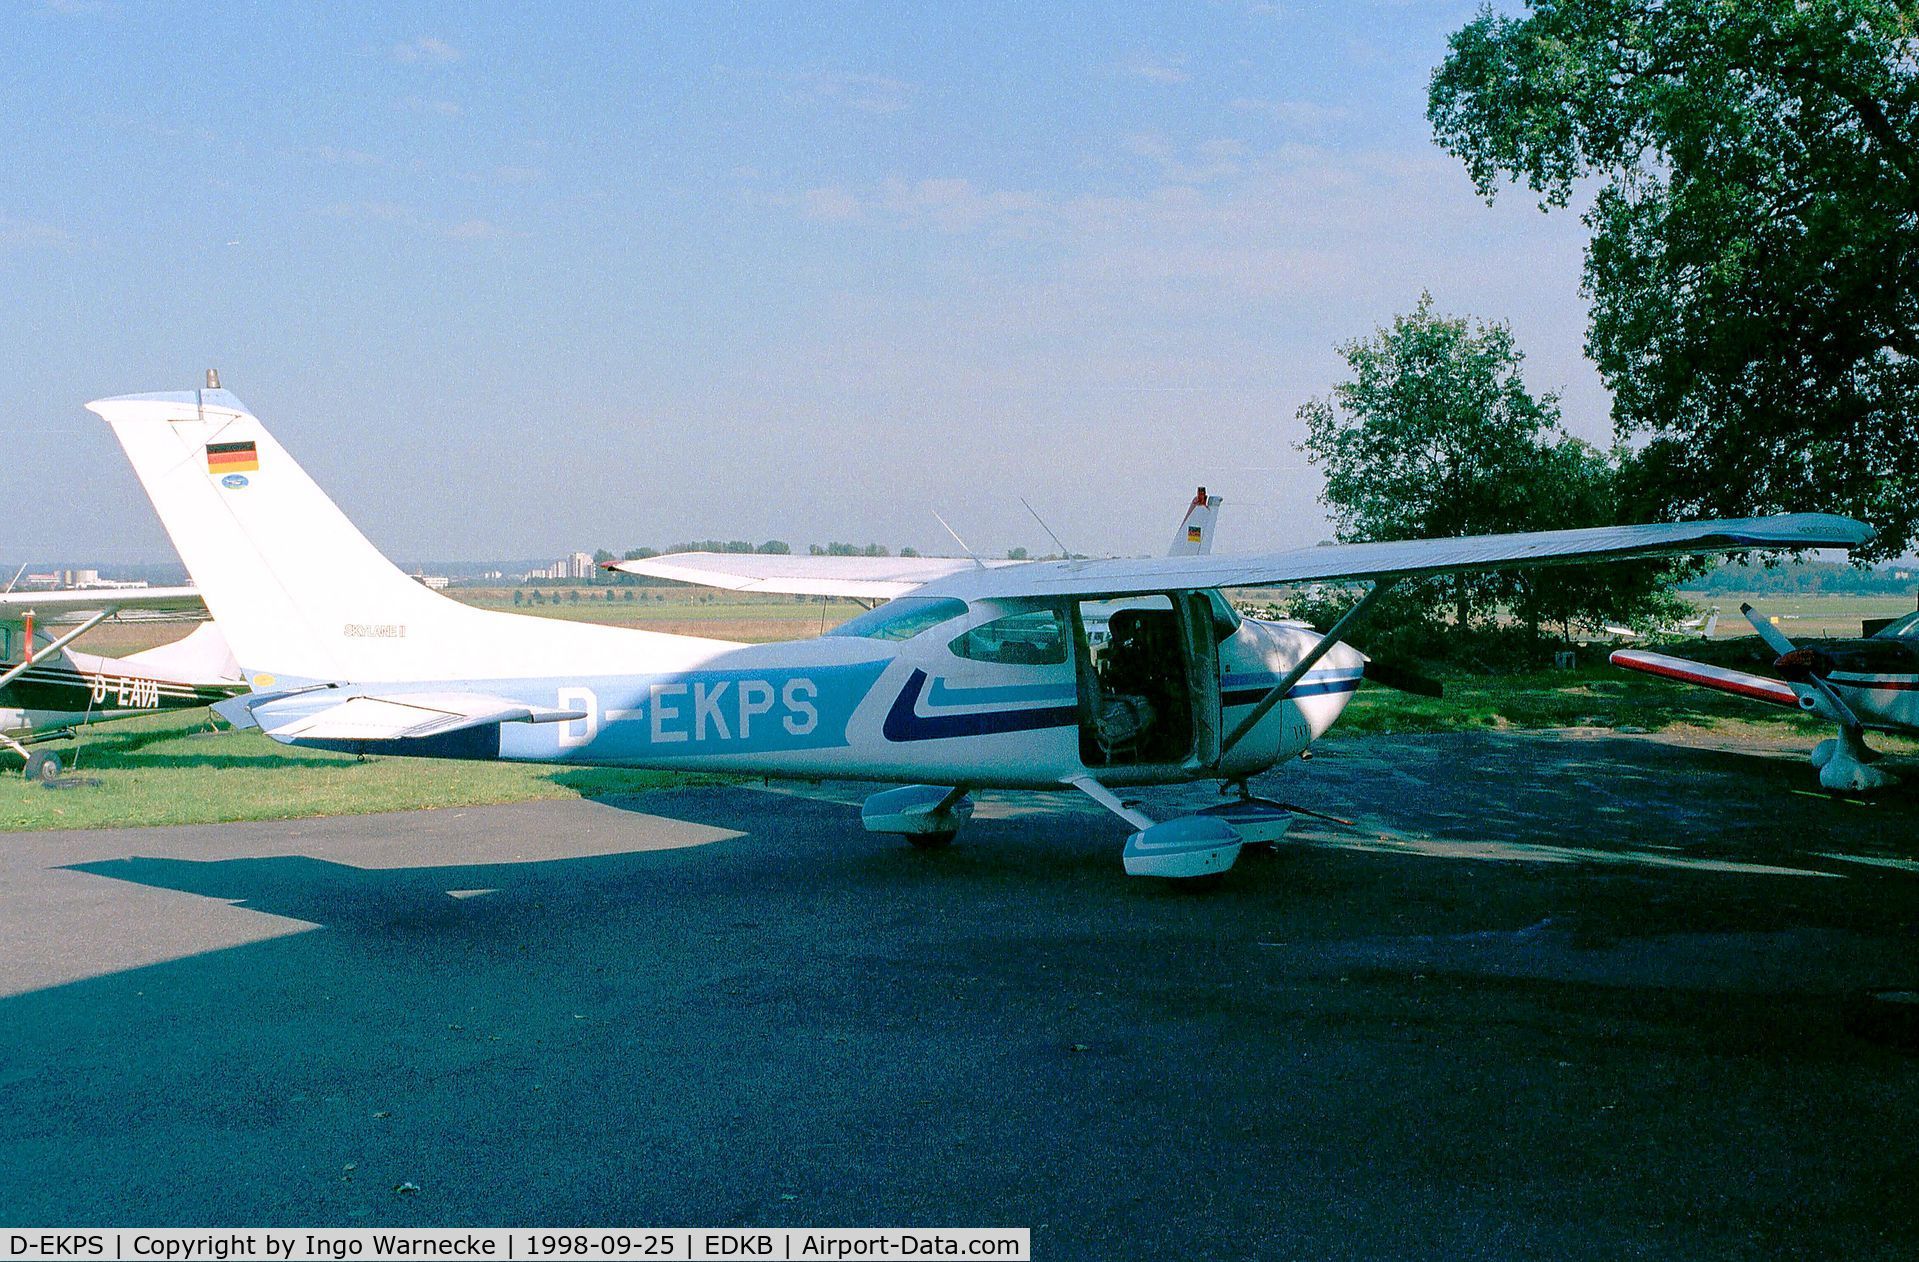 D-EKPS, 1979 Reims F182Q C/N 0077, Cessna (Reims) F182Q Skylane II at Bonn-Hangelar airfield